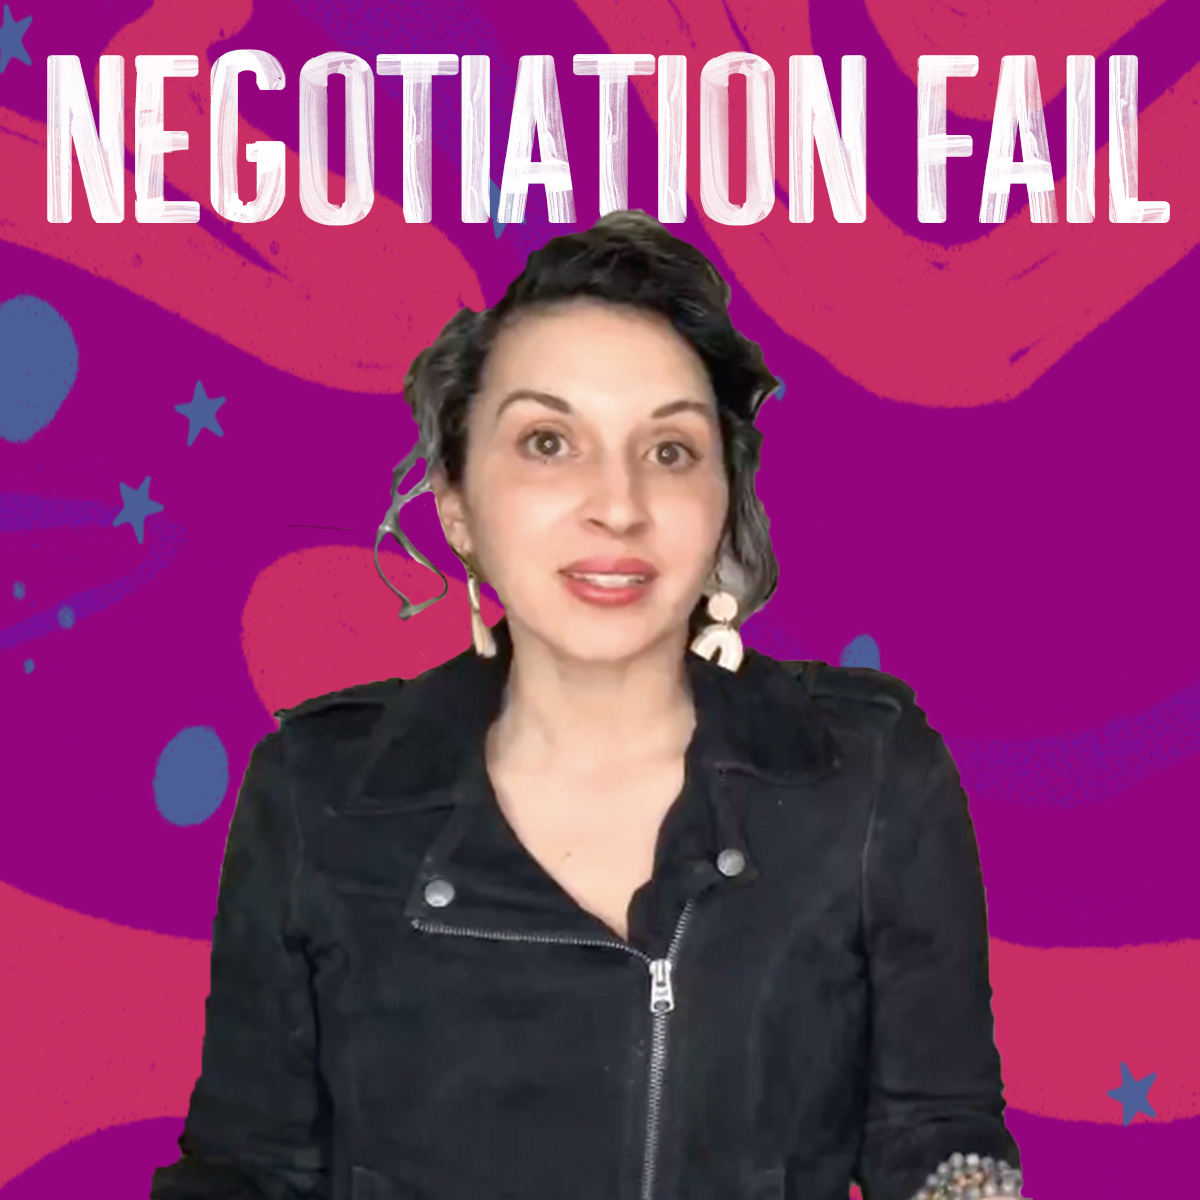 Sales Strategies: My Biggest Negotiation Fail